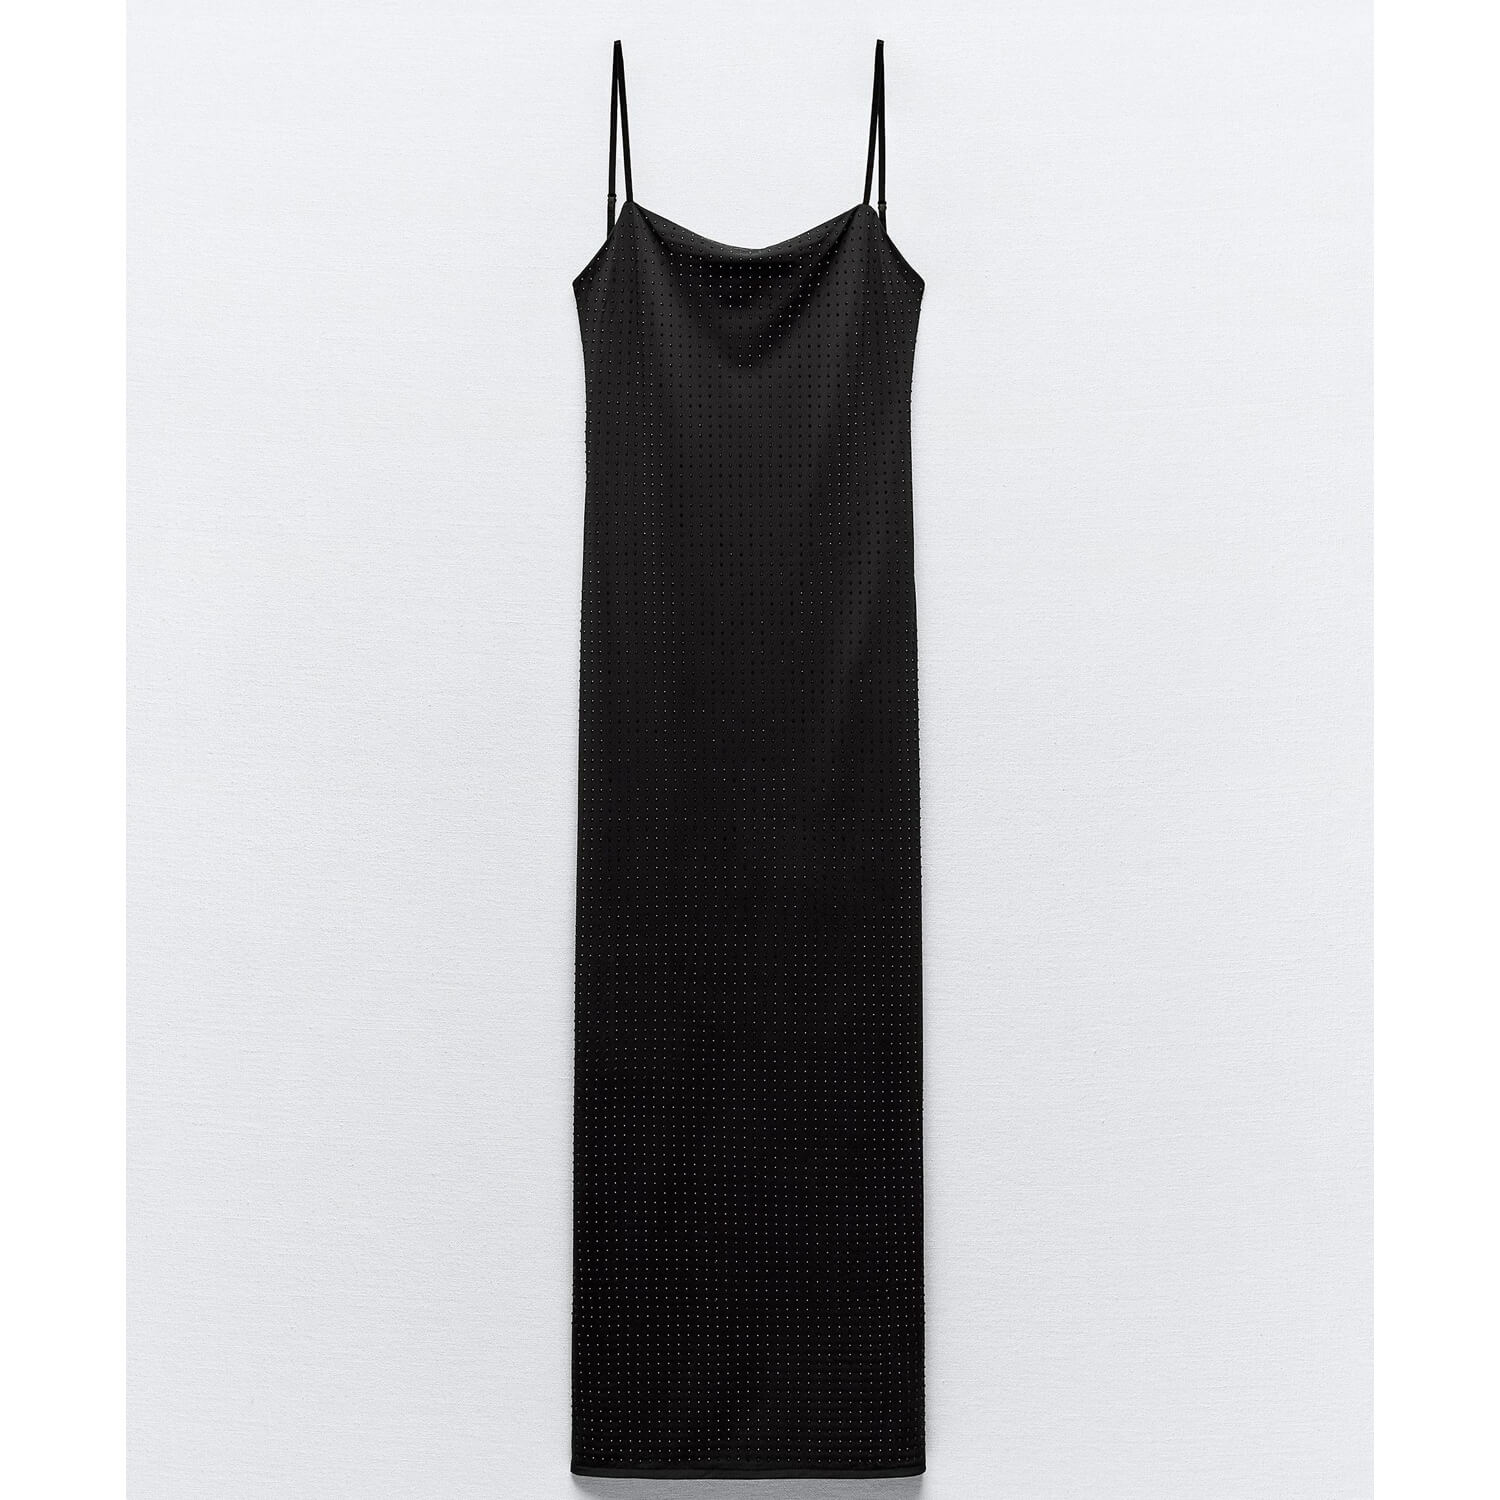 Платье Zara Polyamide Midi With Rhinestones, черный платье zara polyamide midi with rhinestones черный